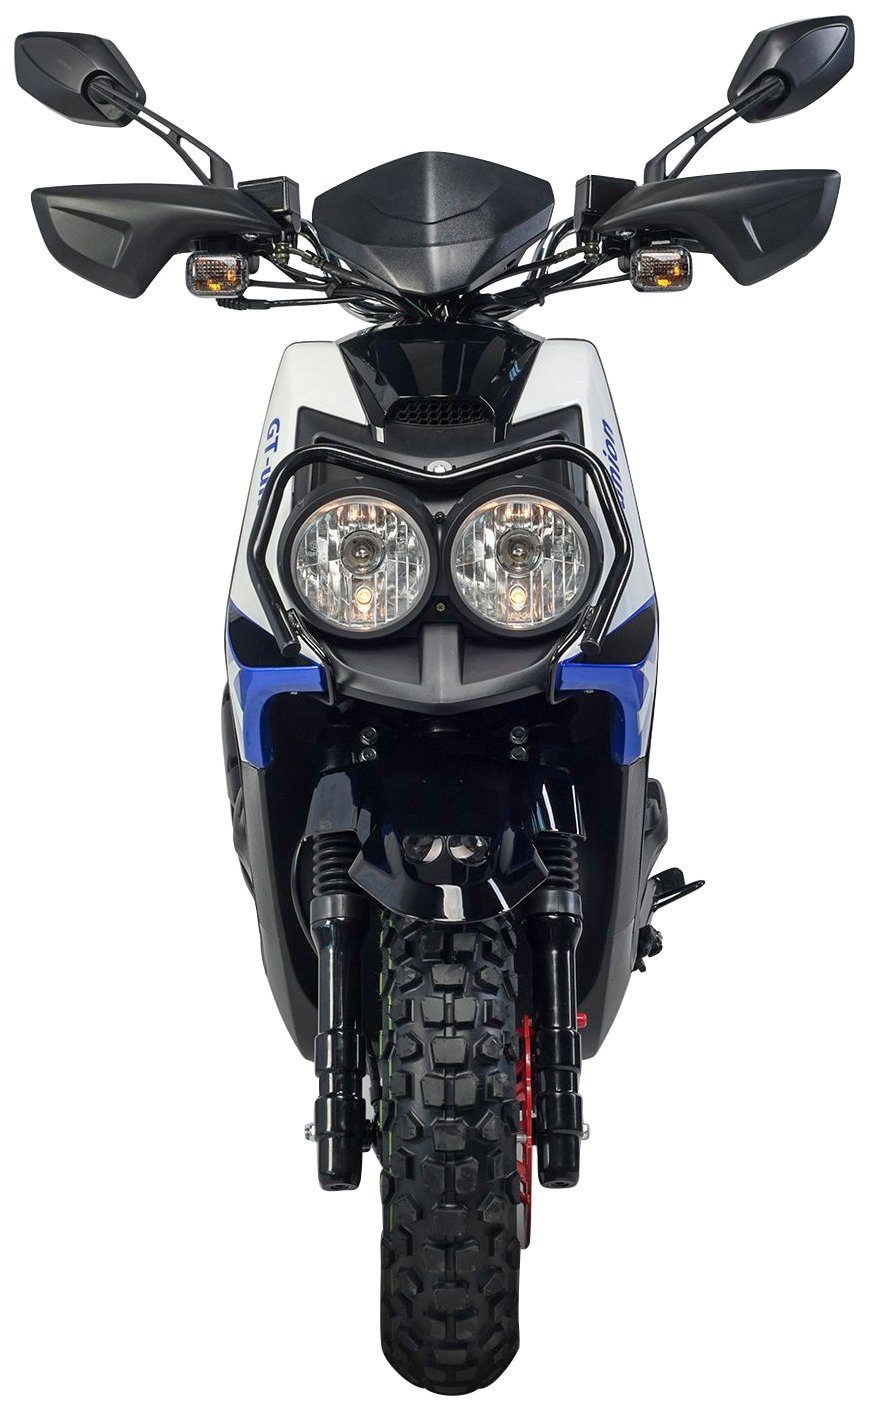 GT UNION Motorroller PX 55 km/h, 5 Cross-Concept, 45 ccm, Euro 50 weiß/blau/schwarz